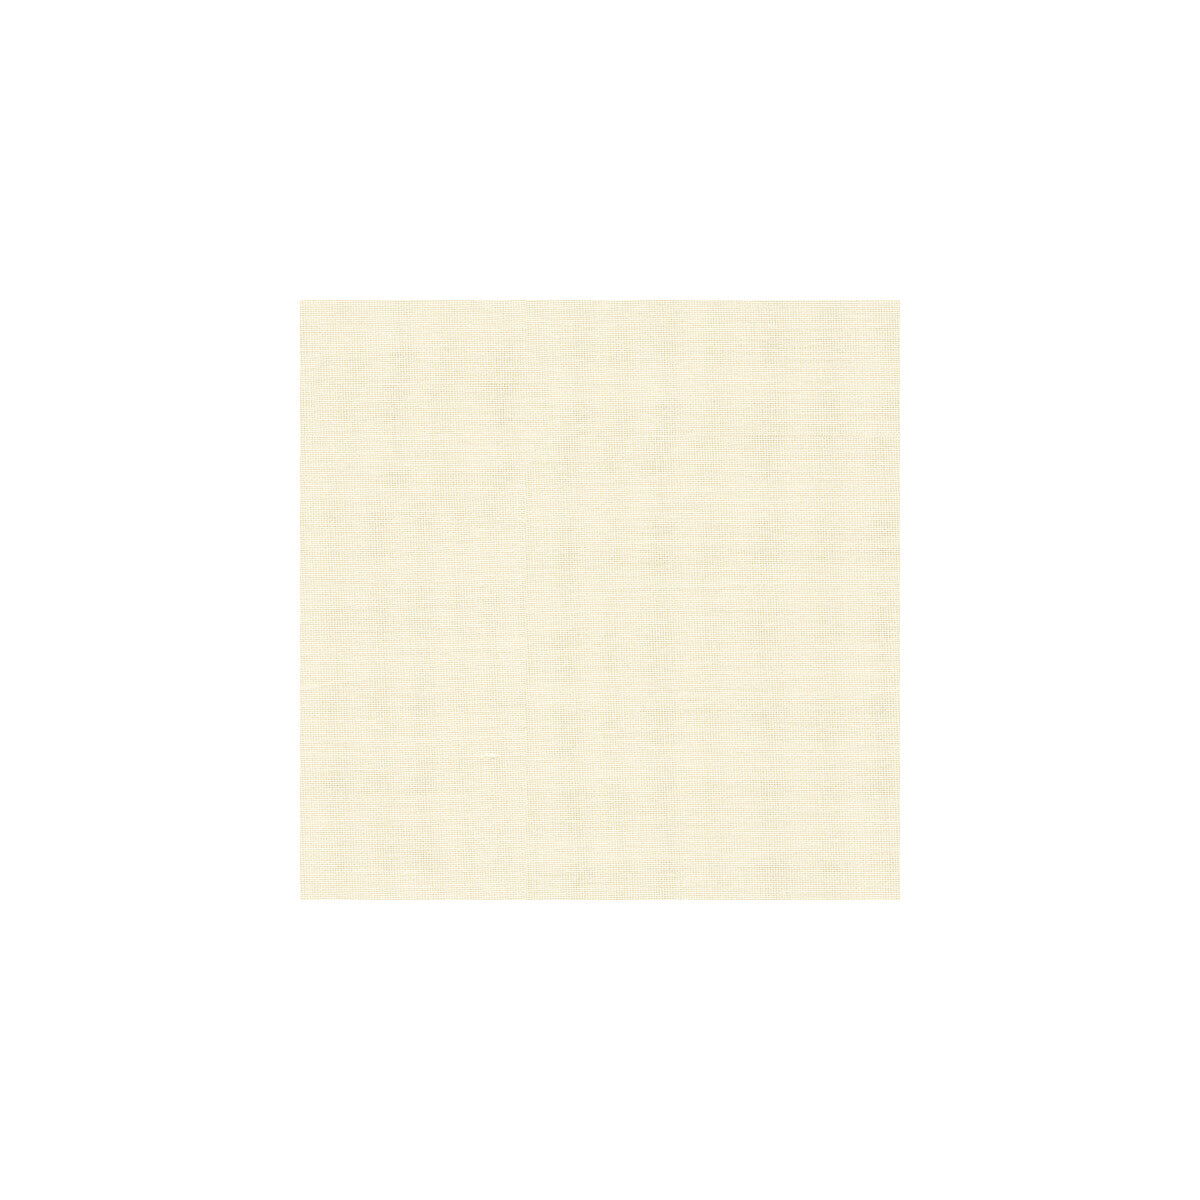 Kravet Basics fabric in 3704-1 color - pattern 3704.1.0 - by Kravet Basics in the Gis collection